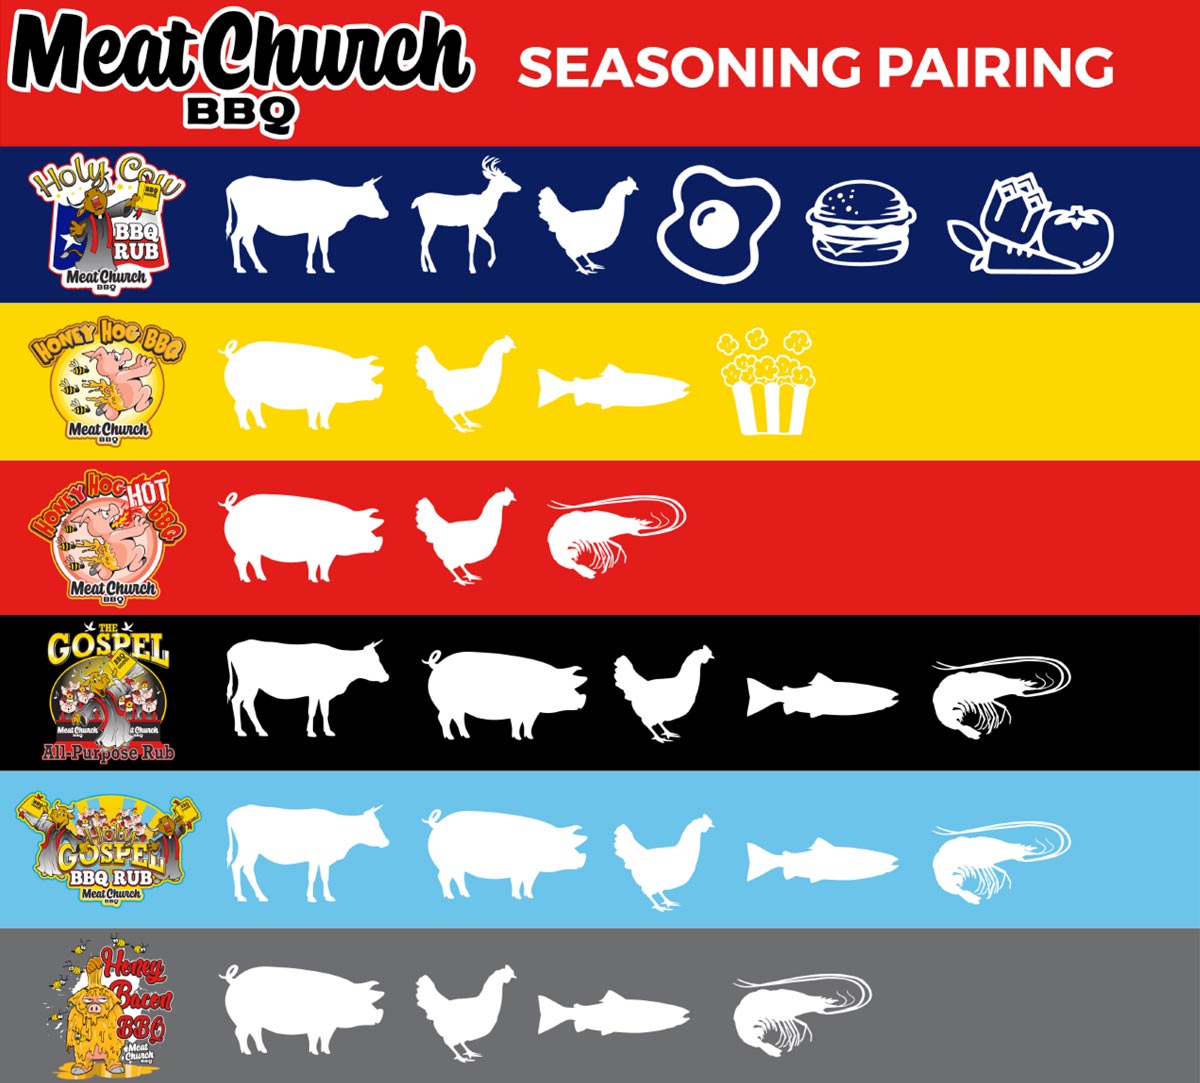 https://www.meadowcreekbbqsupply.com/wp-content/uploads/2020/02/Meat_Church_Seasoning_Pairing_Guide.jpg